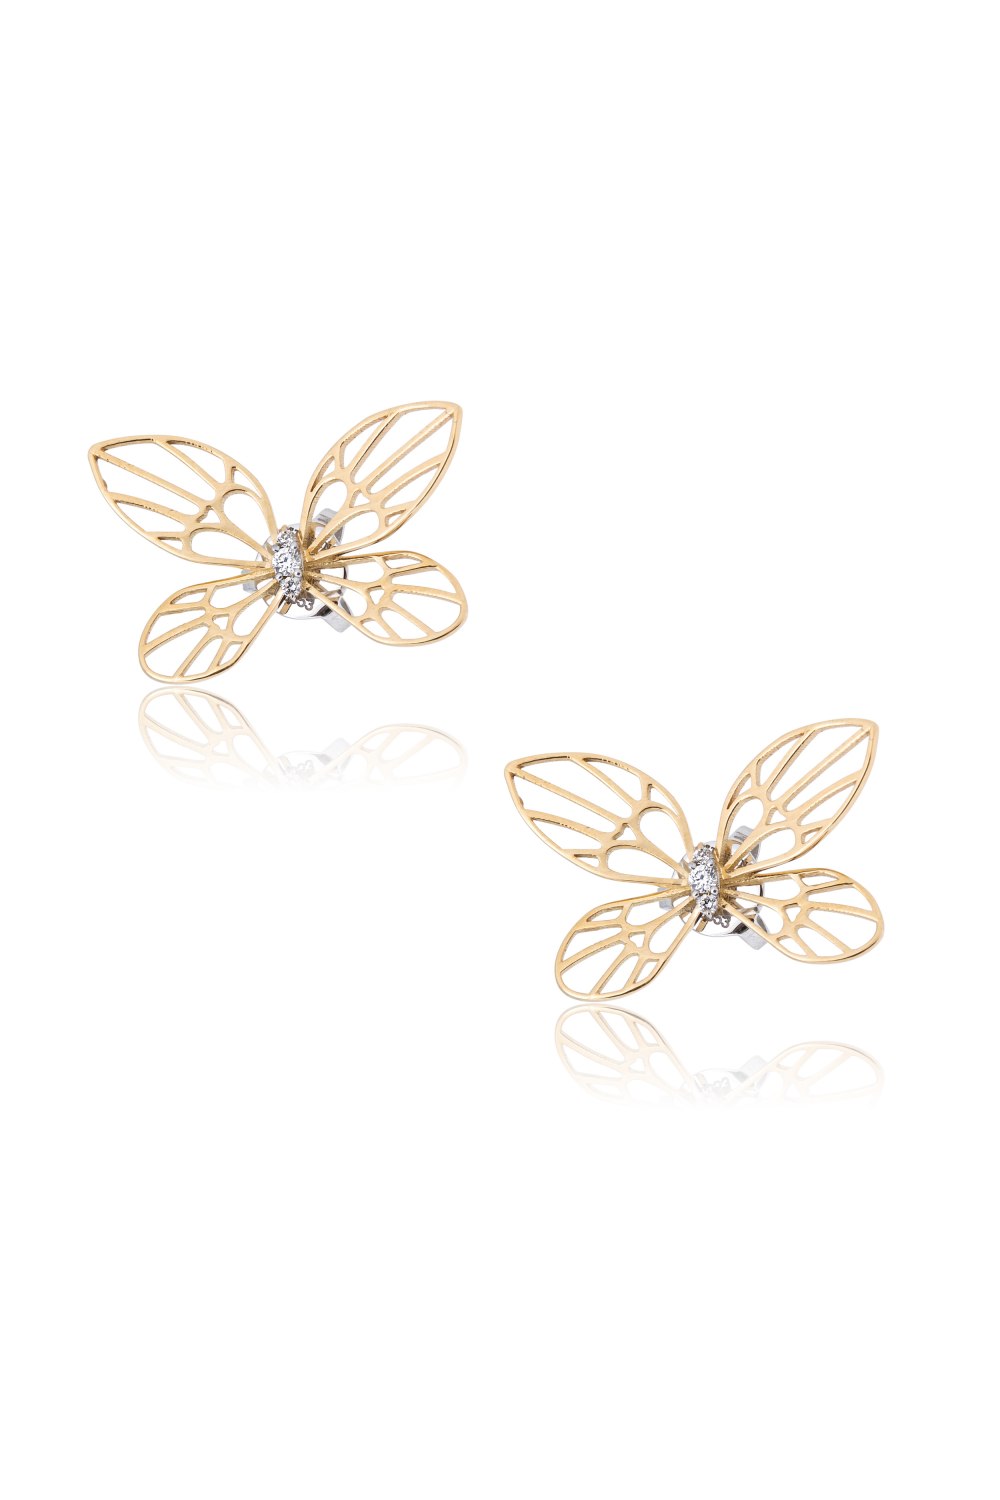 STAURINO FRATELLI - Butterfly Diamond Earings